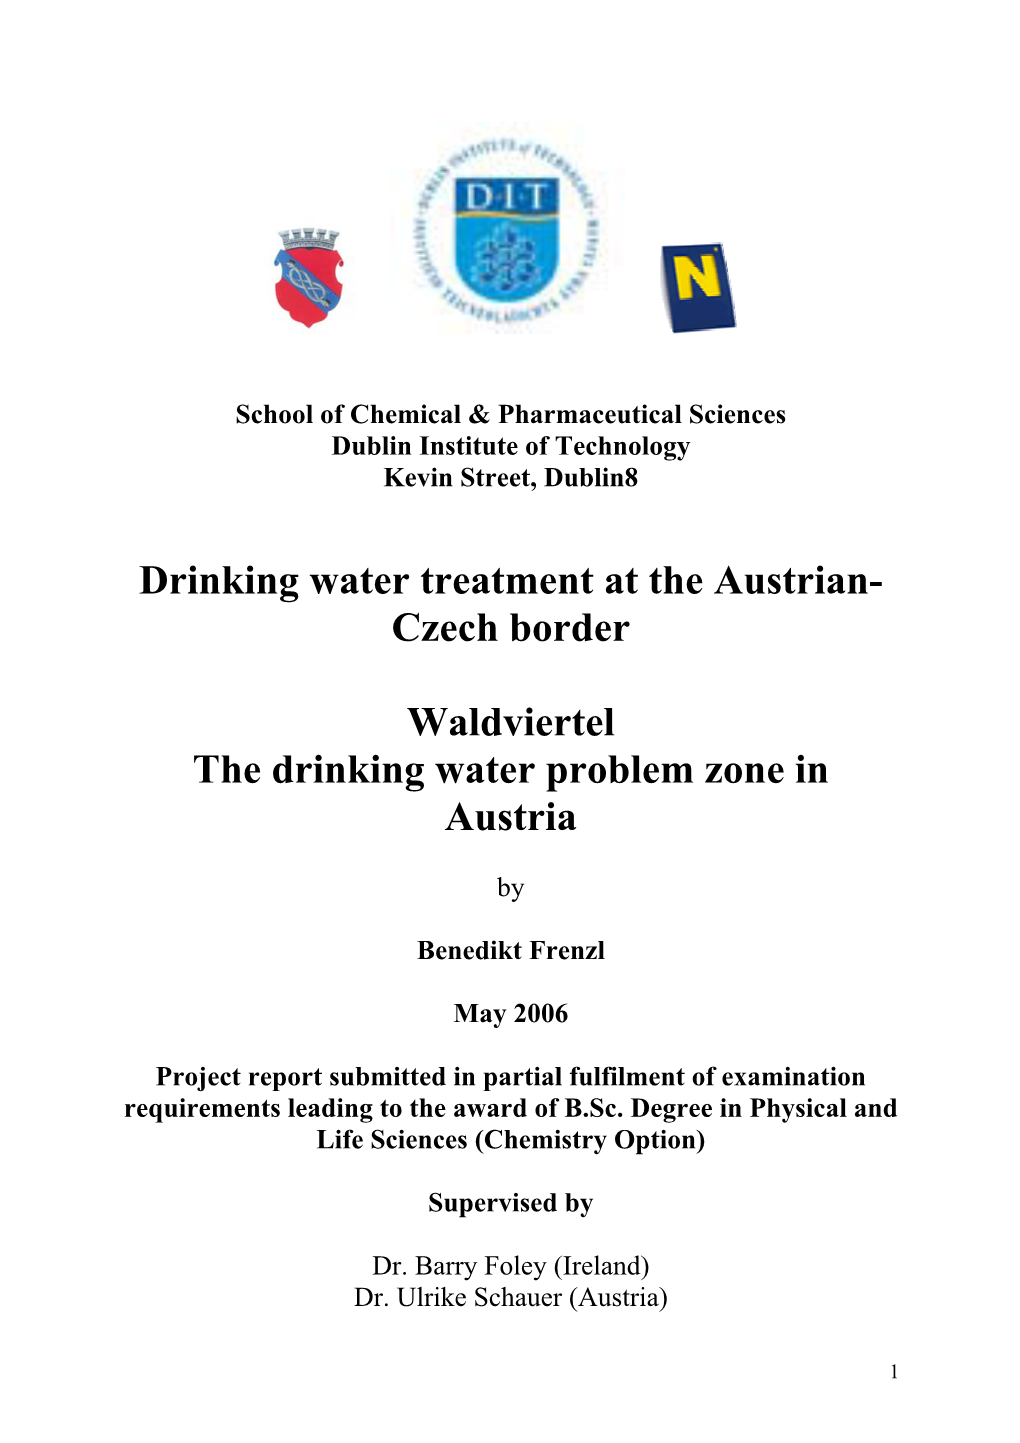 Drinking Water Treatment at the Austrian-Czech Border